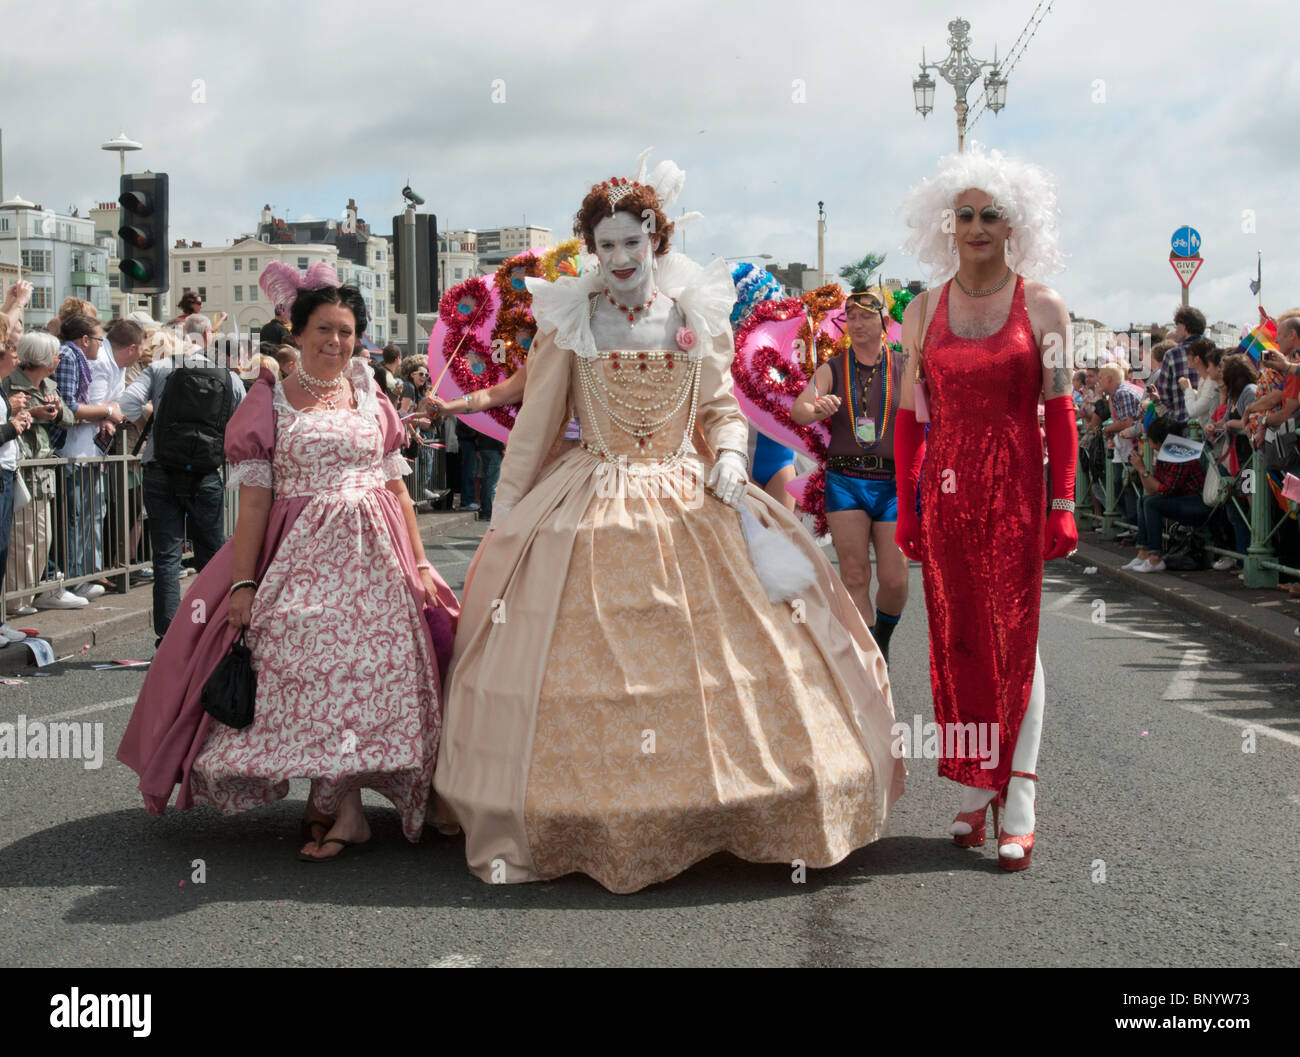 BRIGHTON, ENGLAND, UK - The parade during Brighton Pride, the annual Gay Pride event. Stock Photo